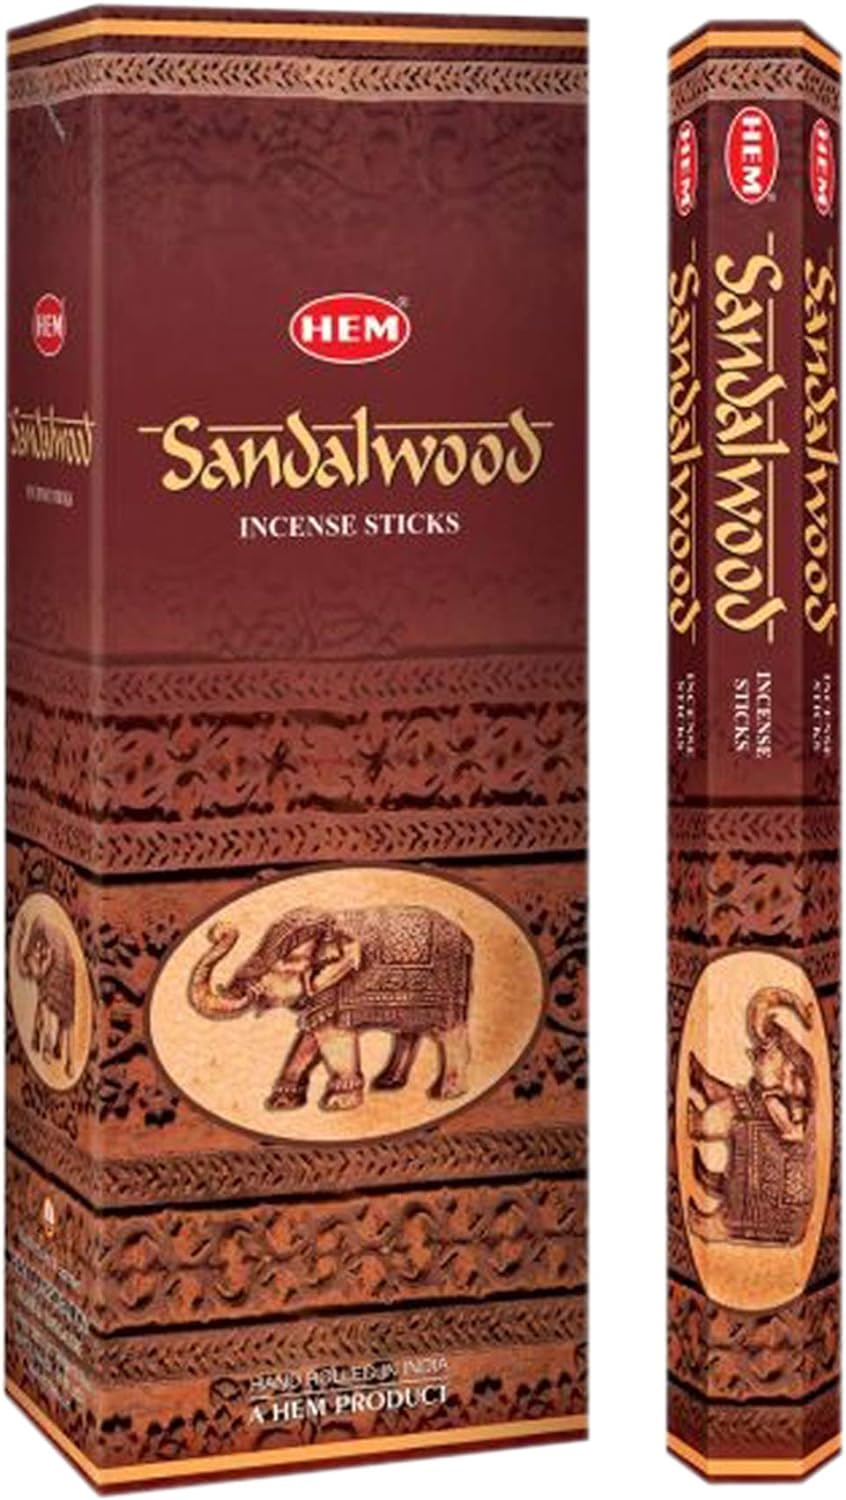 HEM Sandal (Sandalwood) - Box of Six 20 Gram Tubes